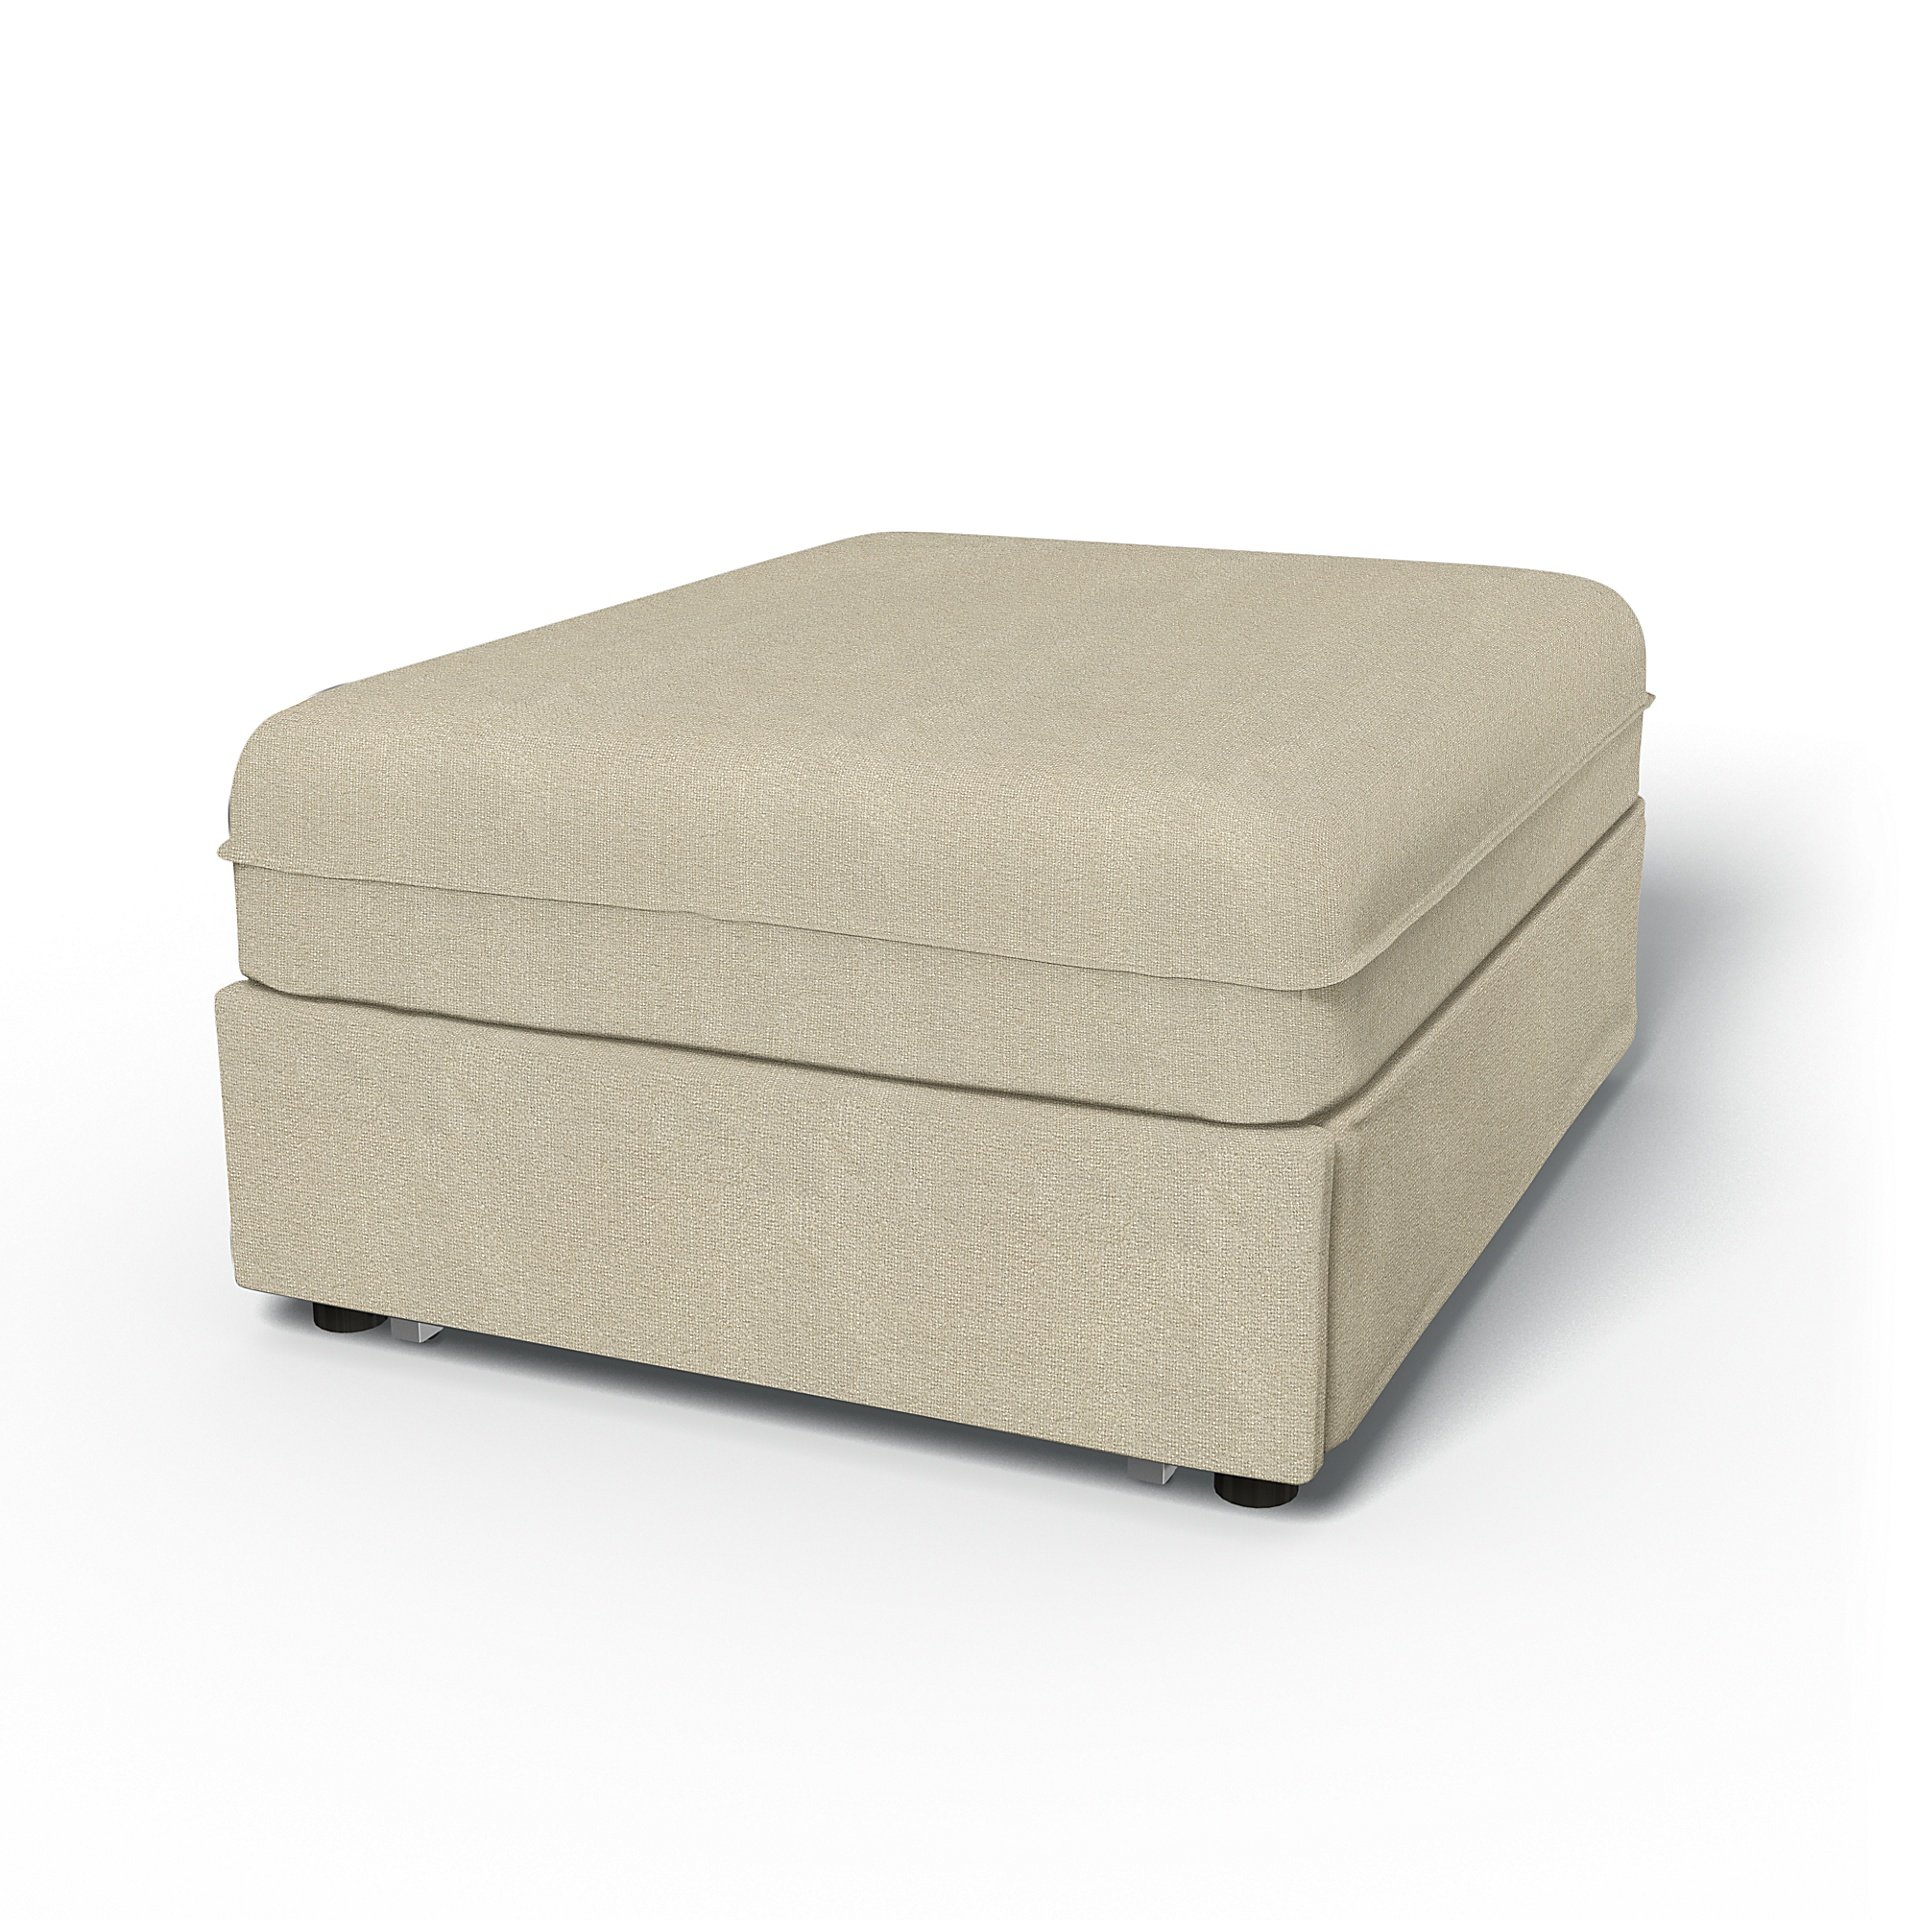 IKEA - Vallentuna Seat Module with Sofa Bed Cover 80x100cm 32x39in, Cream, Boucle & Texture - Bemz